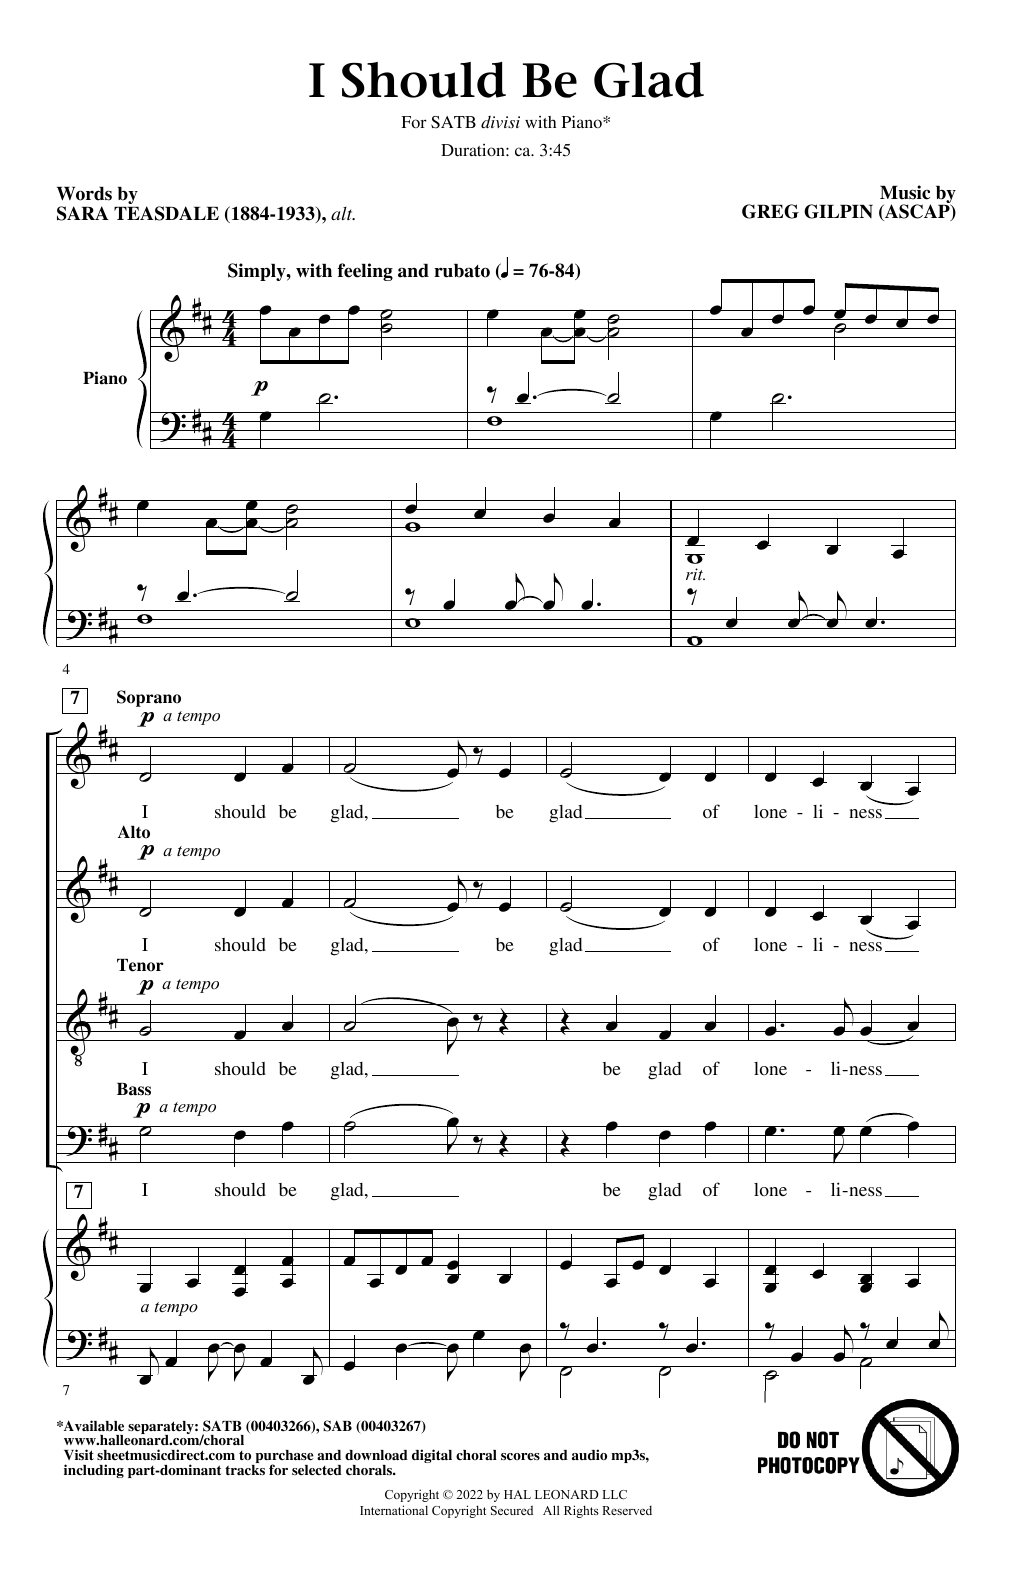 Greg Gilpin I Should Be Glad Sheet Music Notes & Chords for SAB Choir - Download or Print PDF